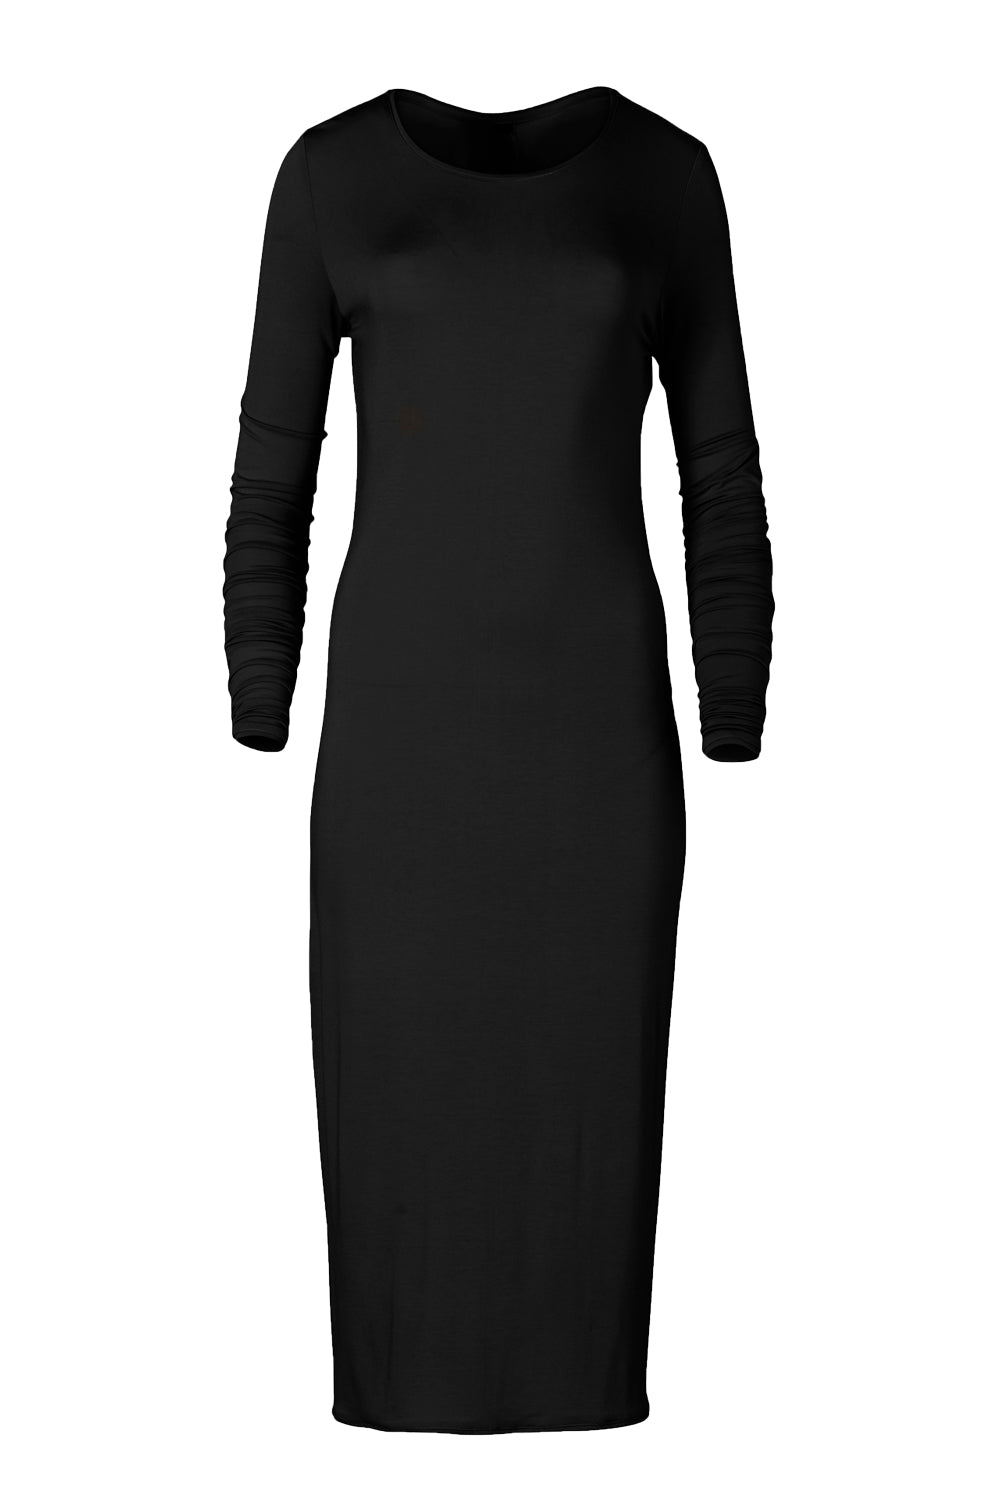 Carbon | Luxe Lounge Dress - Black